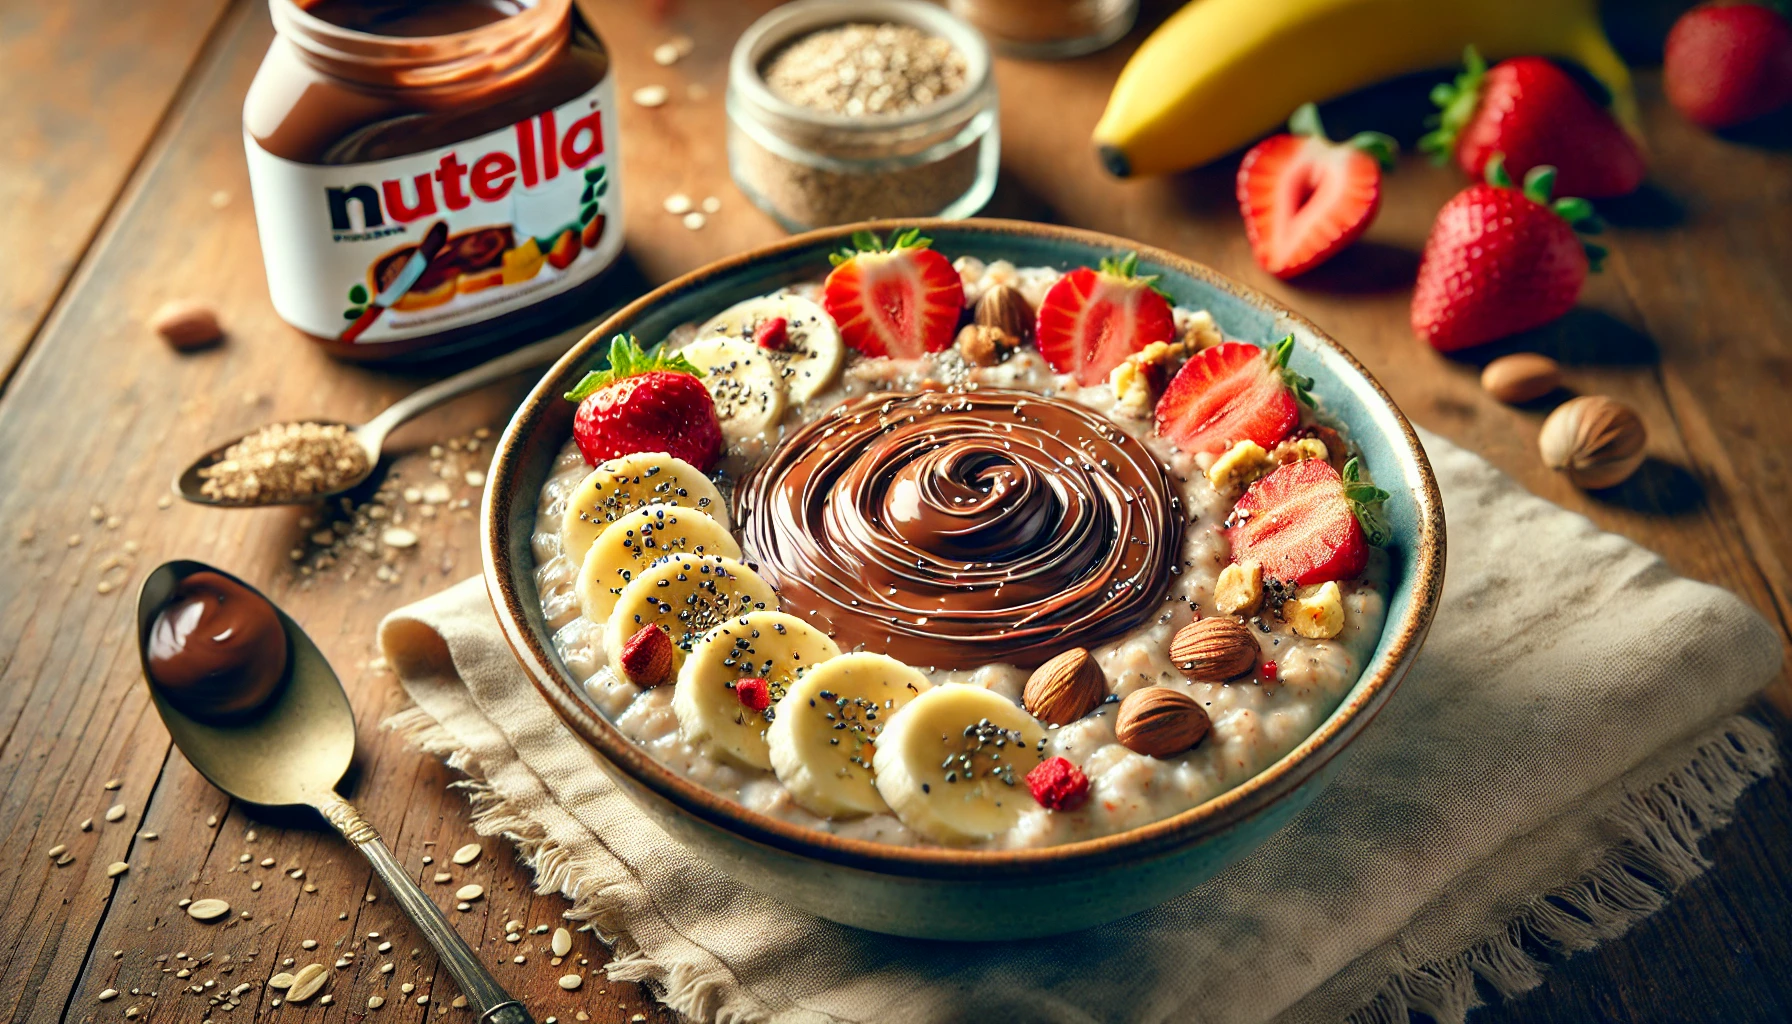 Nutella Havermout: Een Warm, Troostend Ontbijt